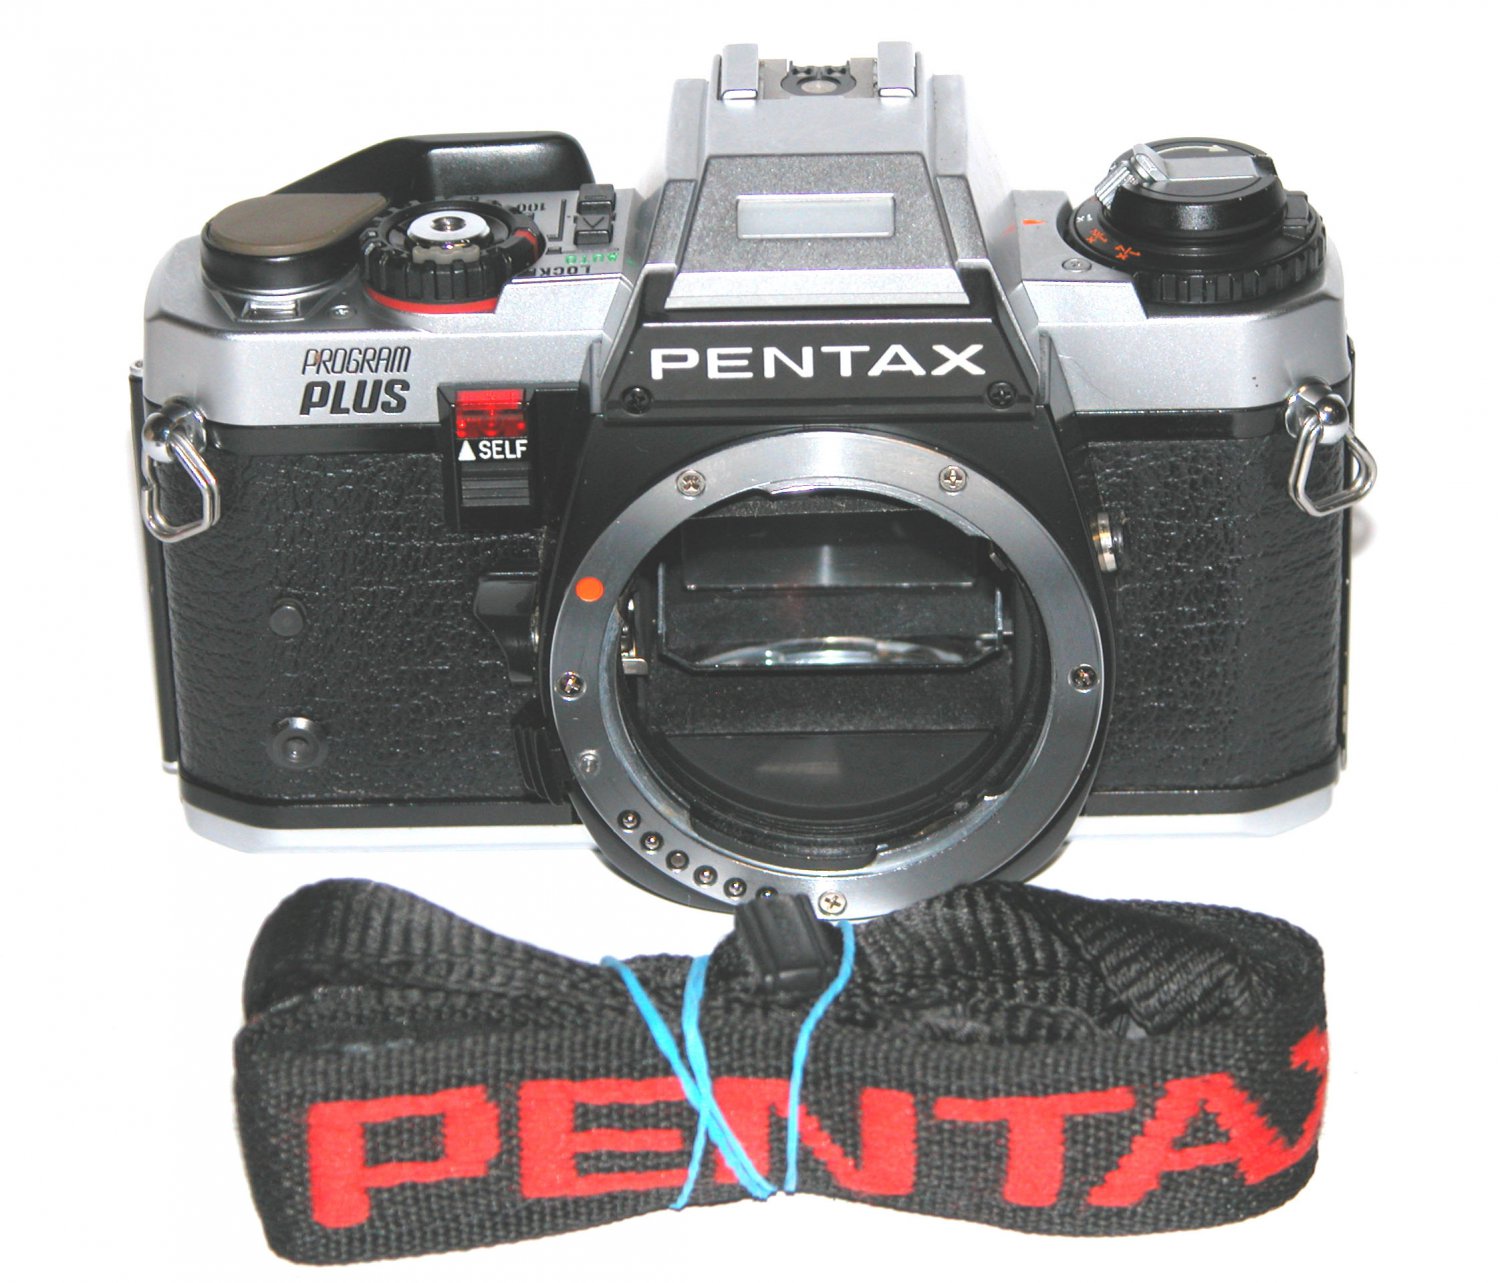 Pentax Program Plus 35mm SLR Film Camera (Body Only)